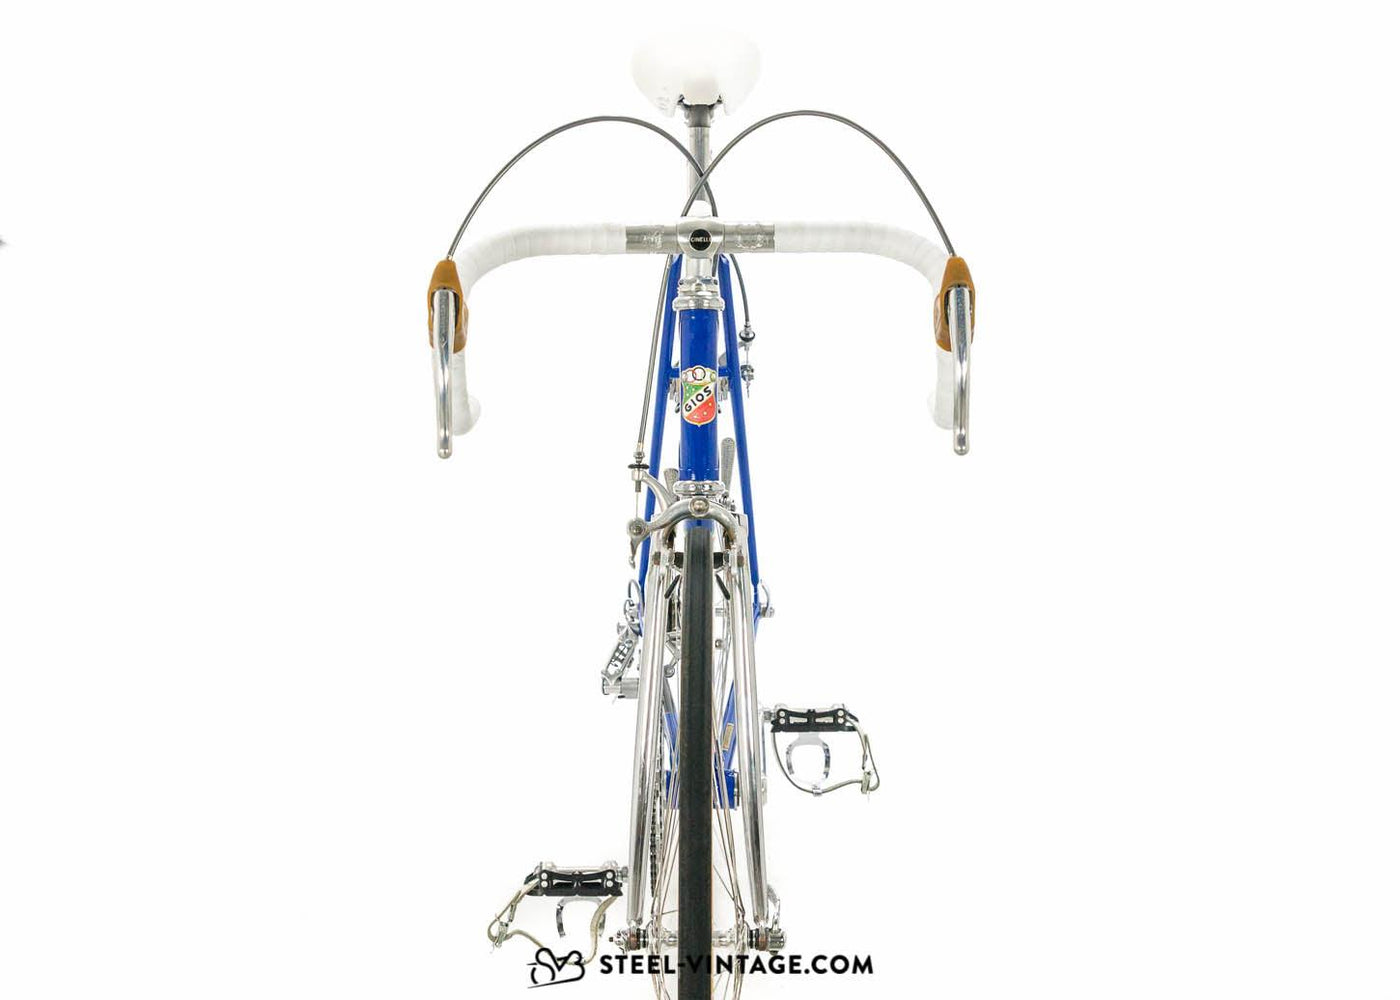 Gios Torino Super Record Racing Bike 1970s - Steel Vintage Bikes